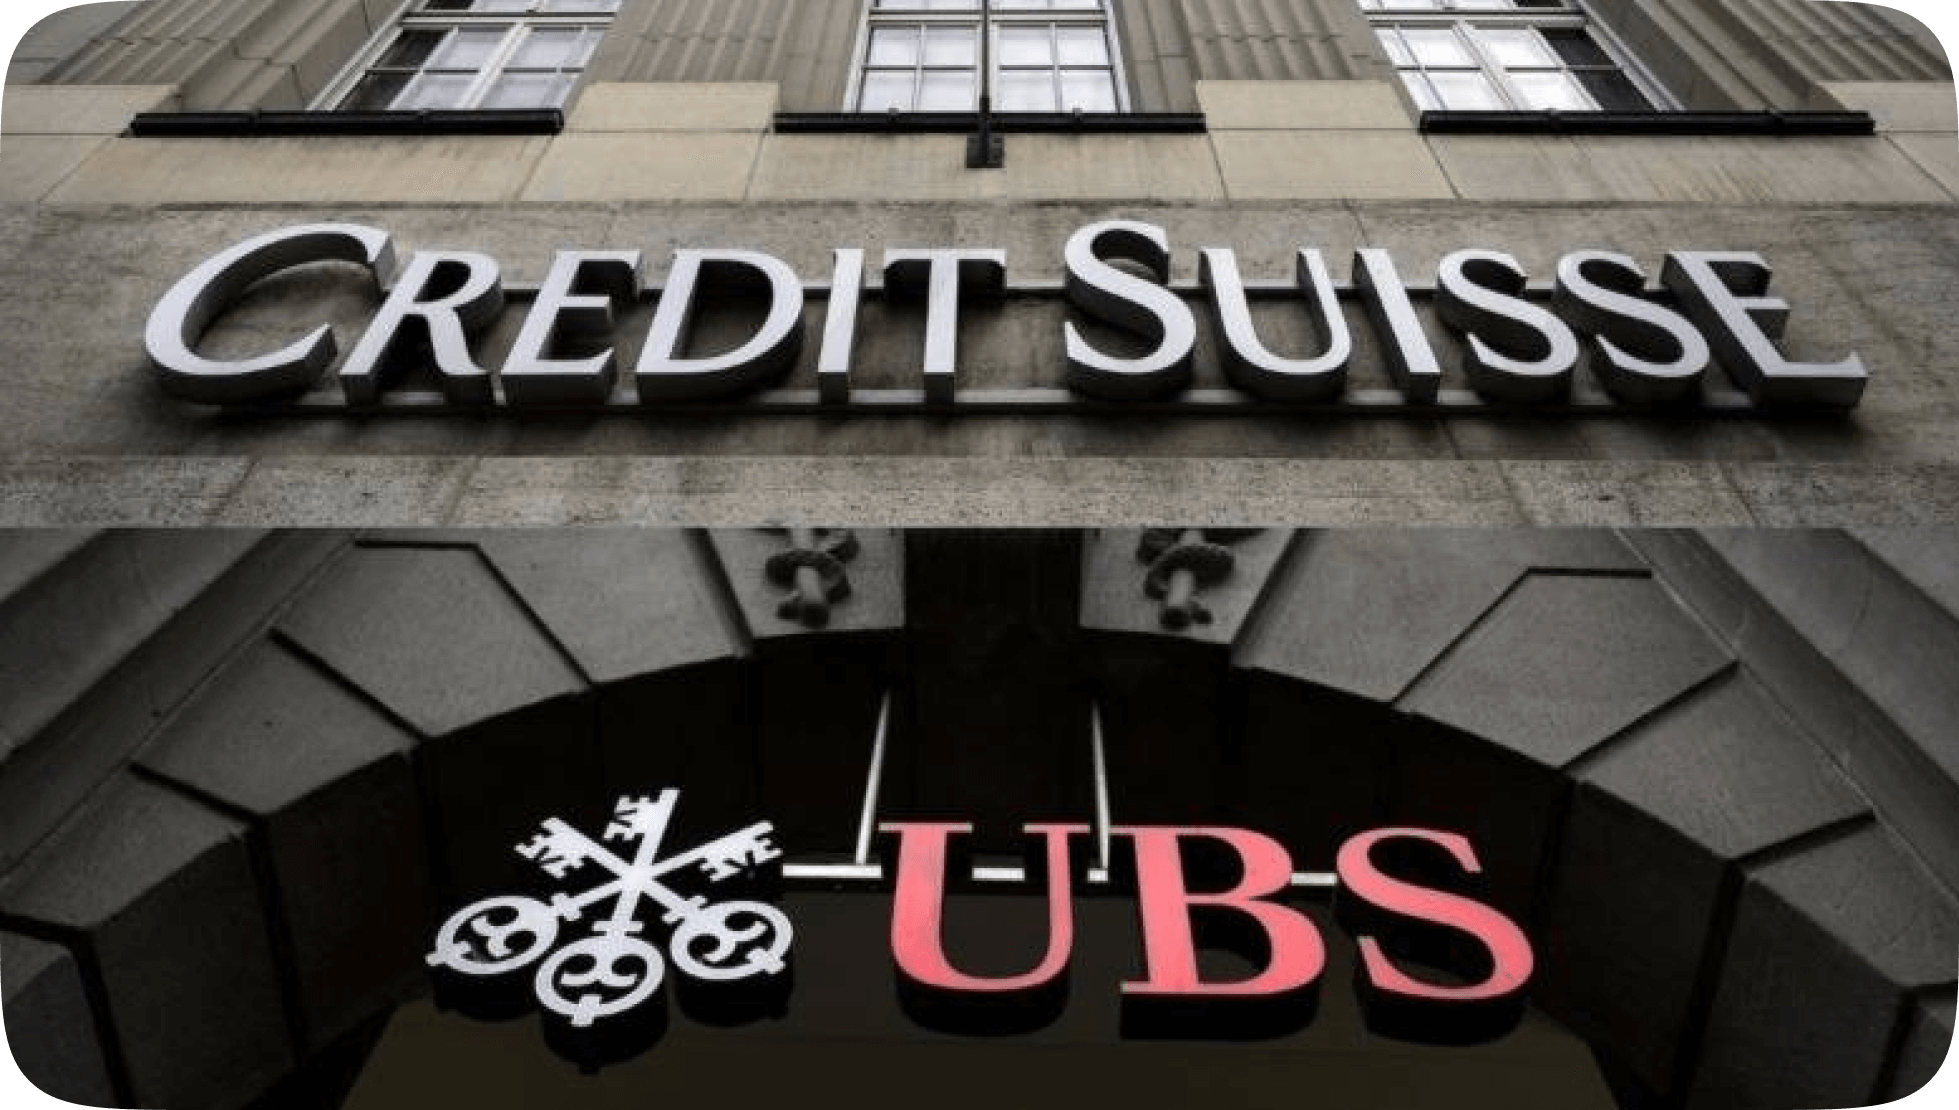 Deal between Credit Suisse and UBS